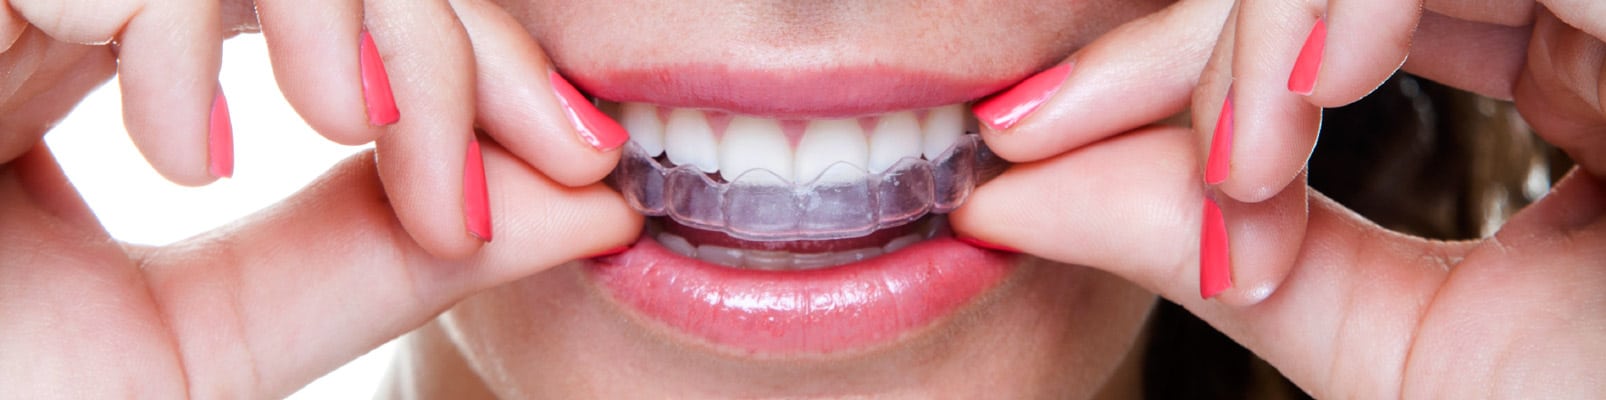 patient placing Invisalign clear aligner on upper teeth